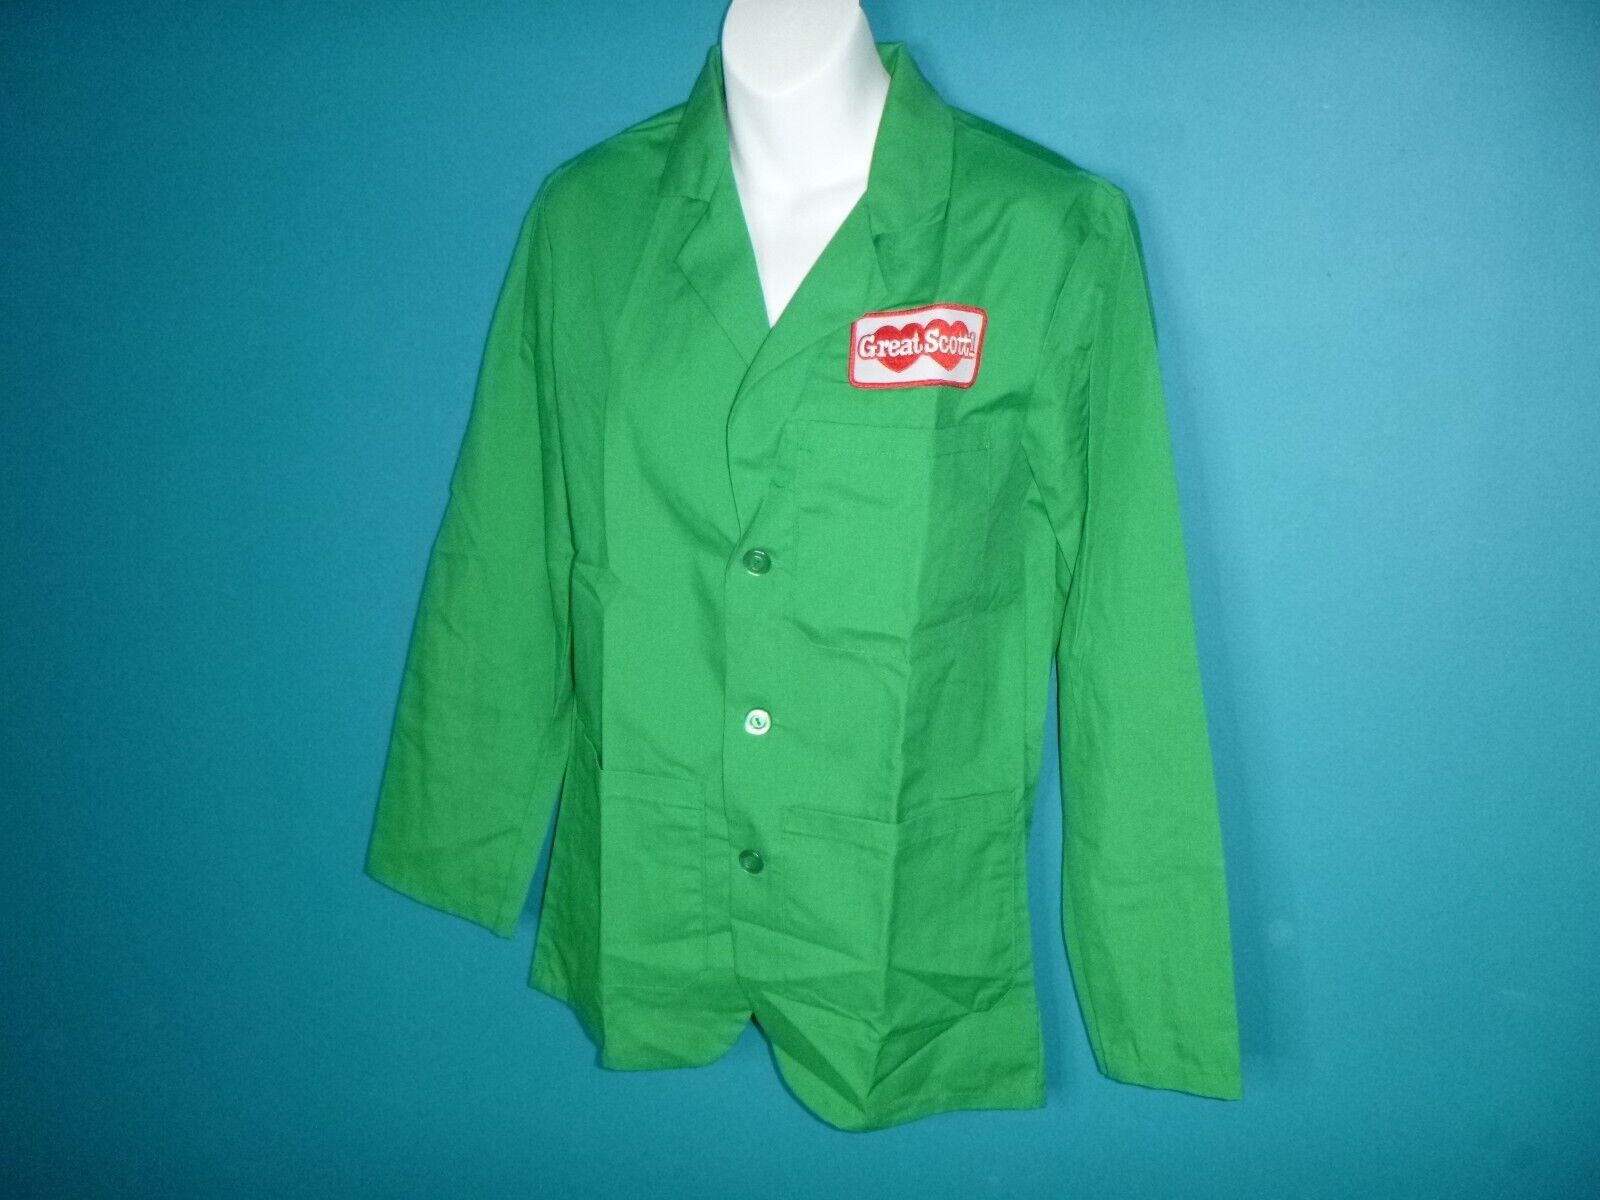 NOS Vtg Great Scott Grocery Store Uniform Jacket Bright Green Sz 34 Detroit